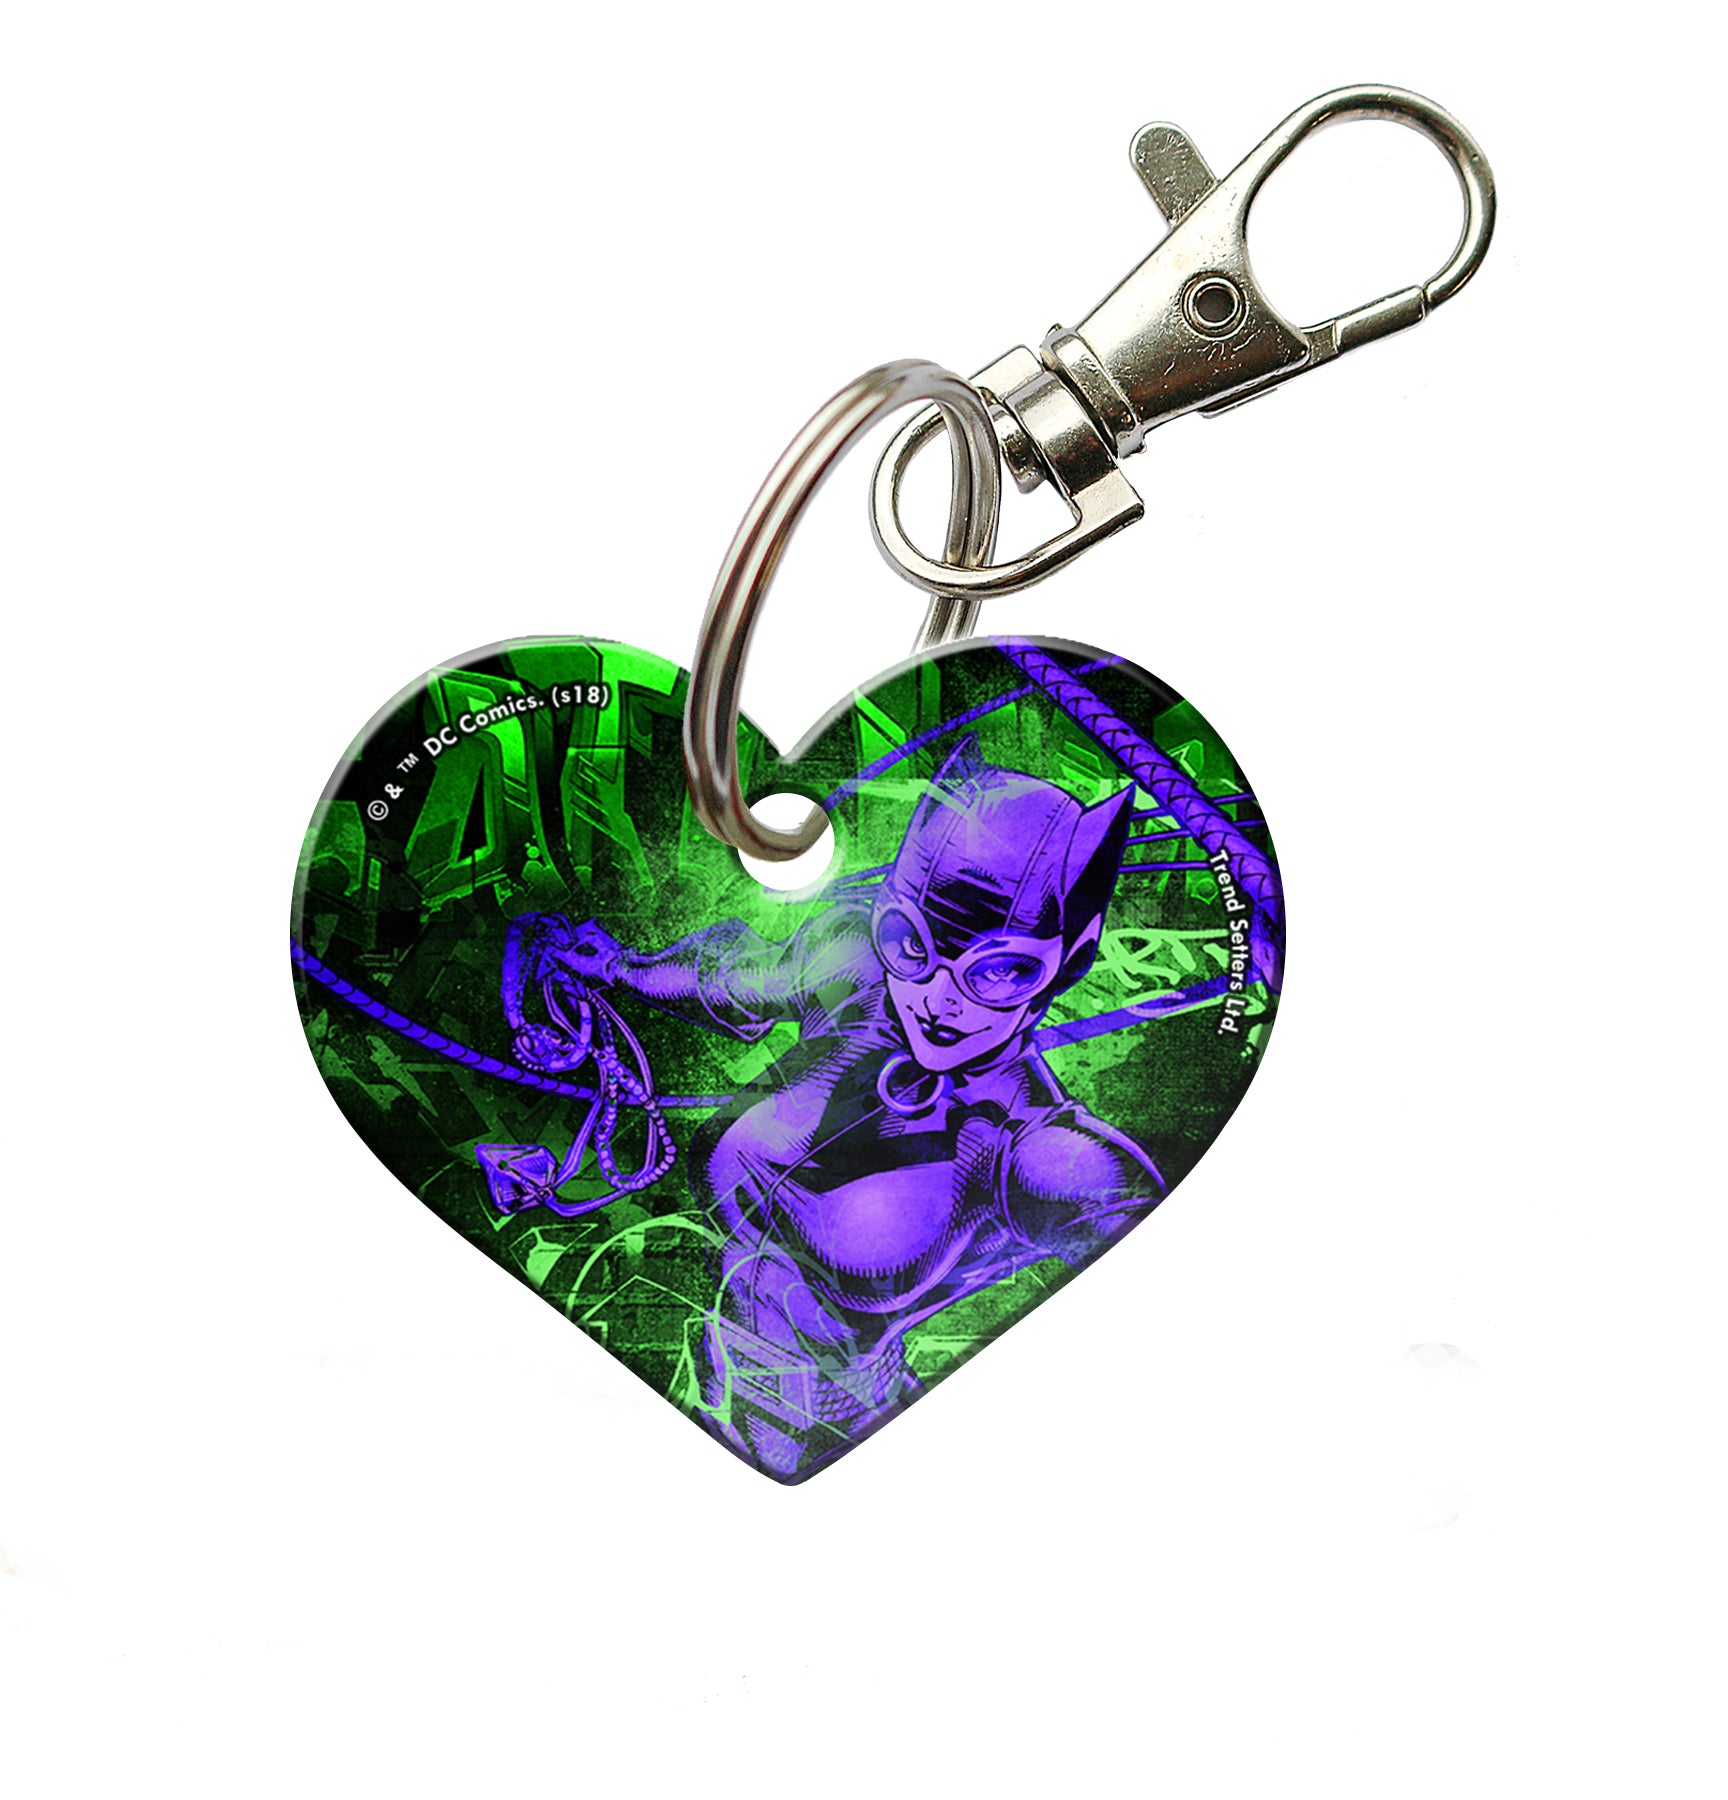 DC Comics (Catwoman - Selina Kyle) Acrylic Keychain ACPKRHEART408